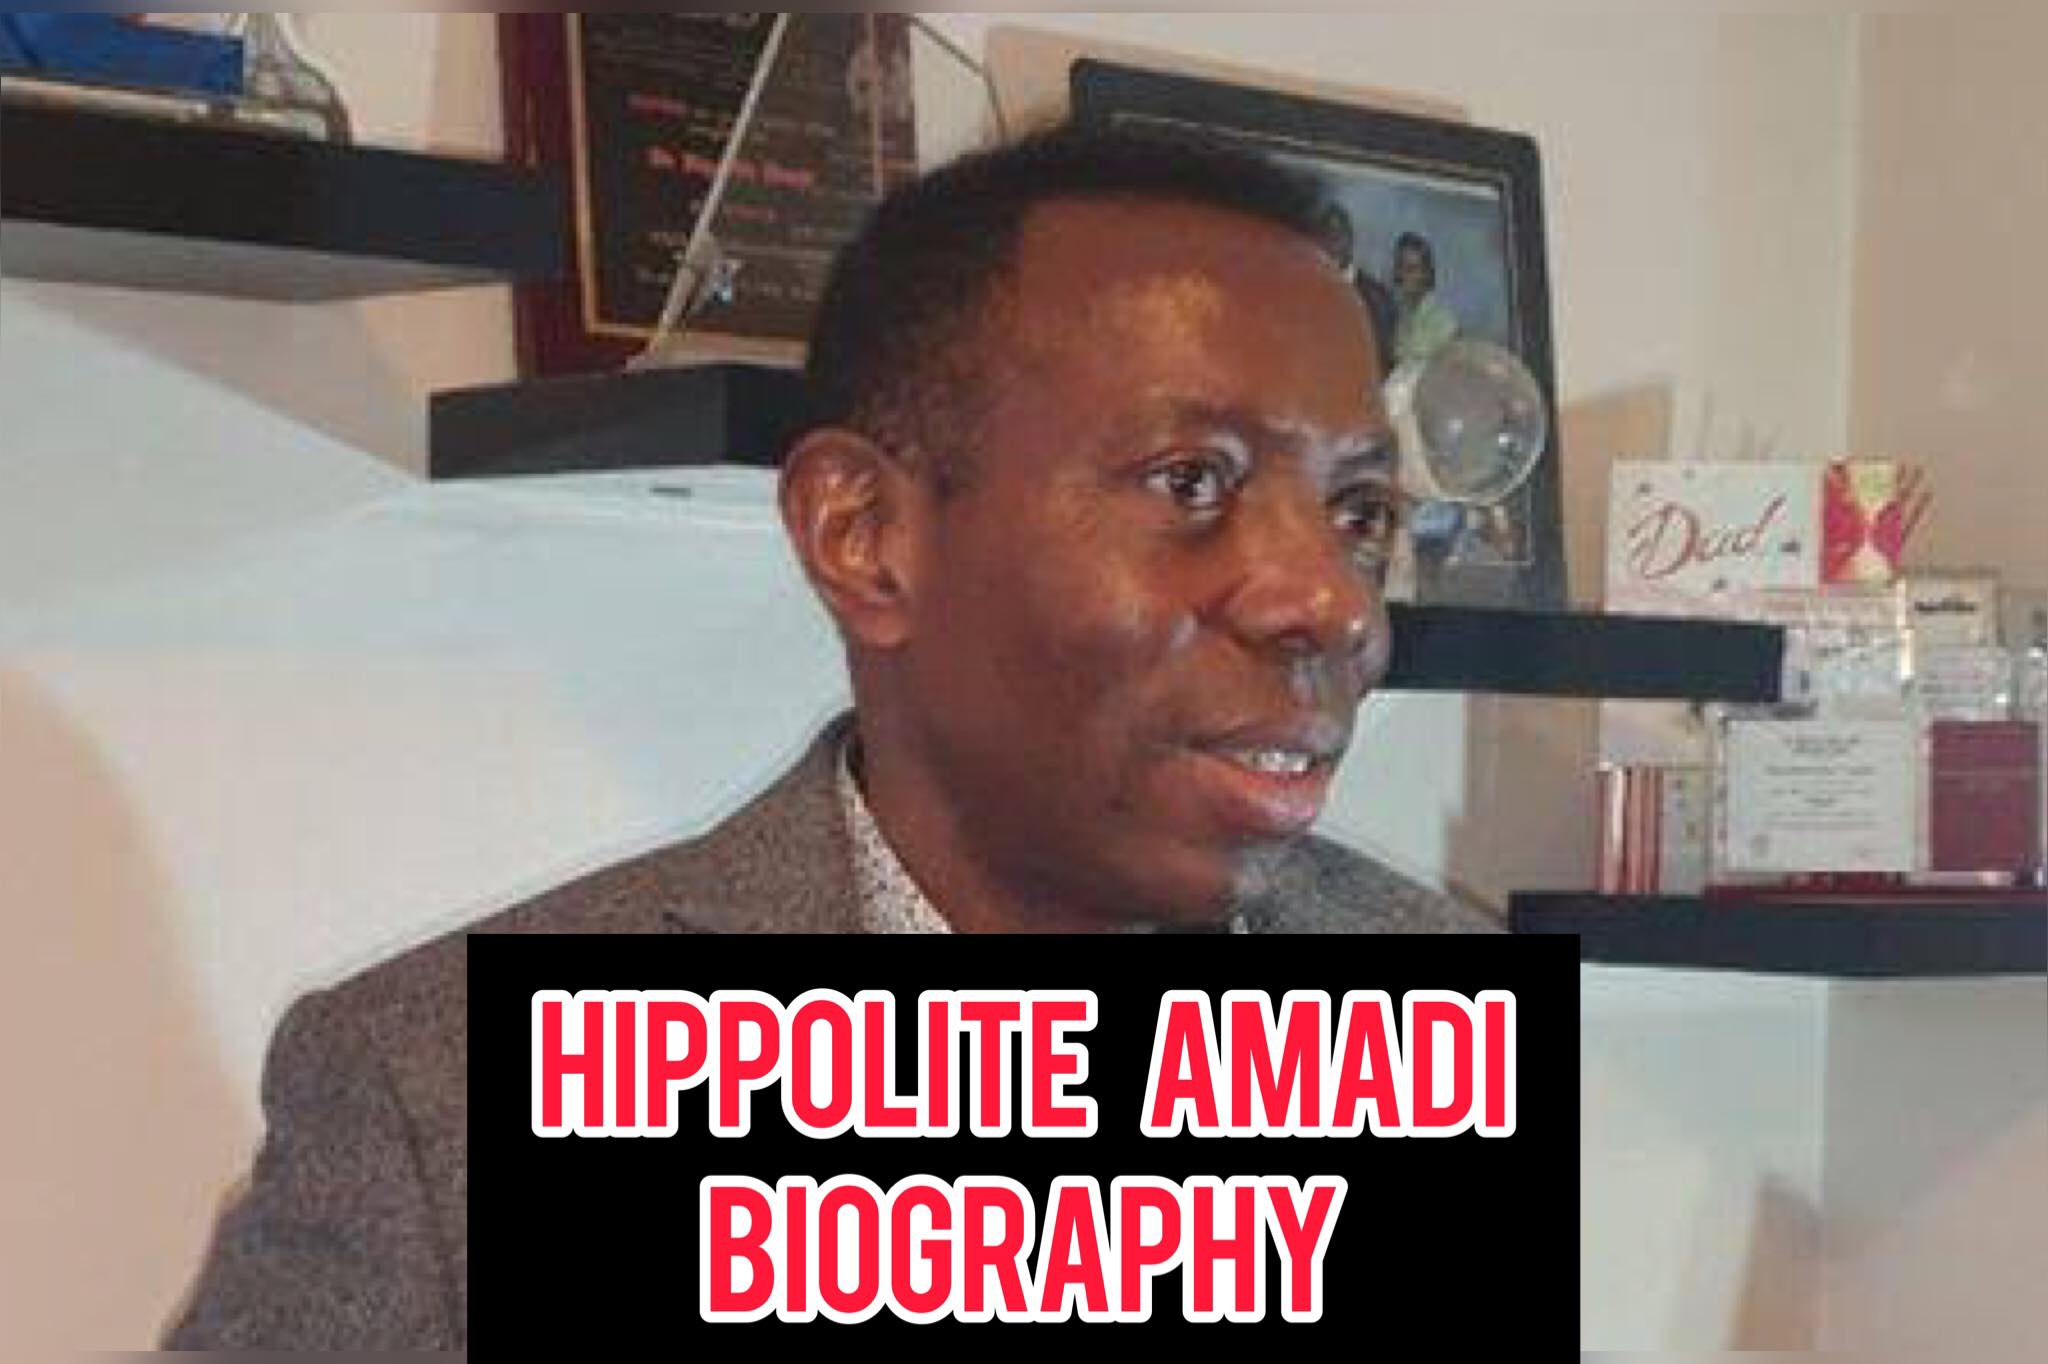 Hippolite Amadi Biography